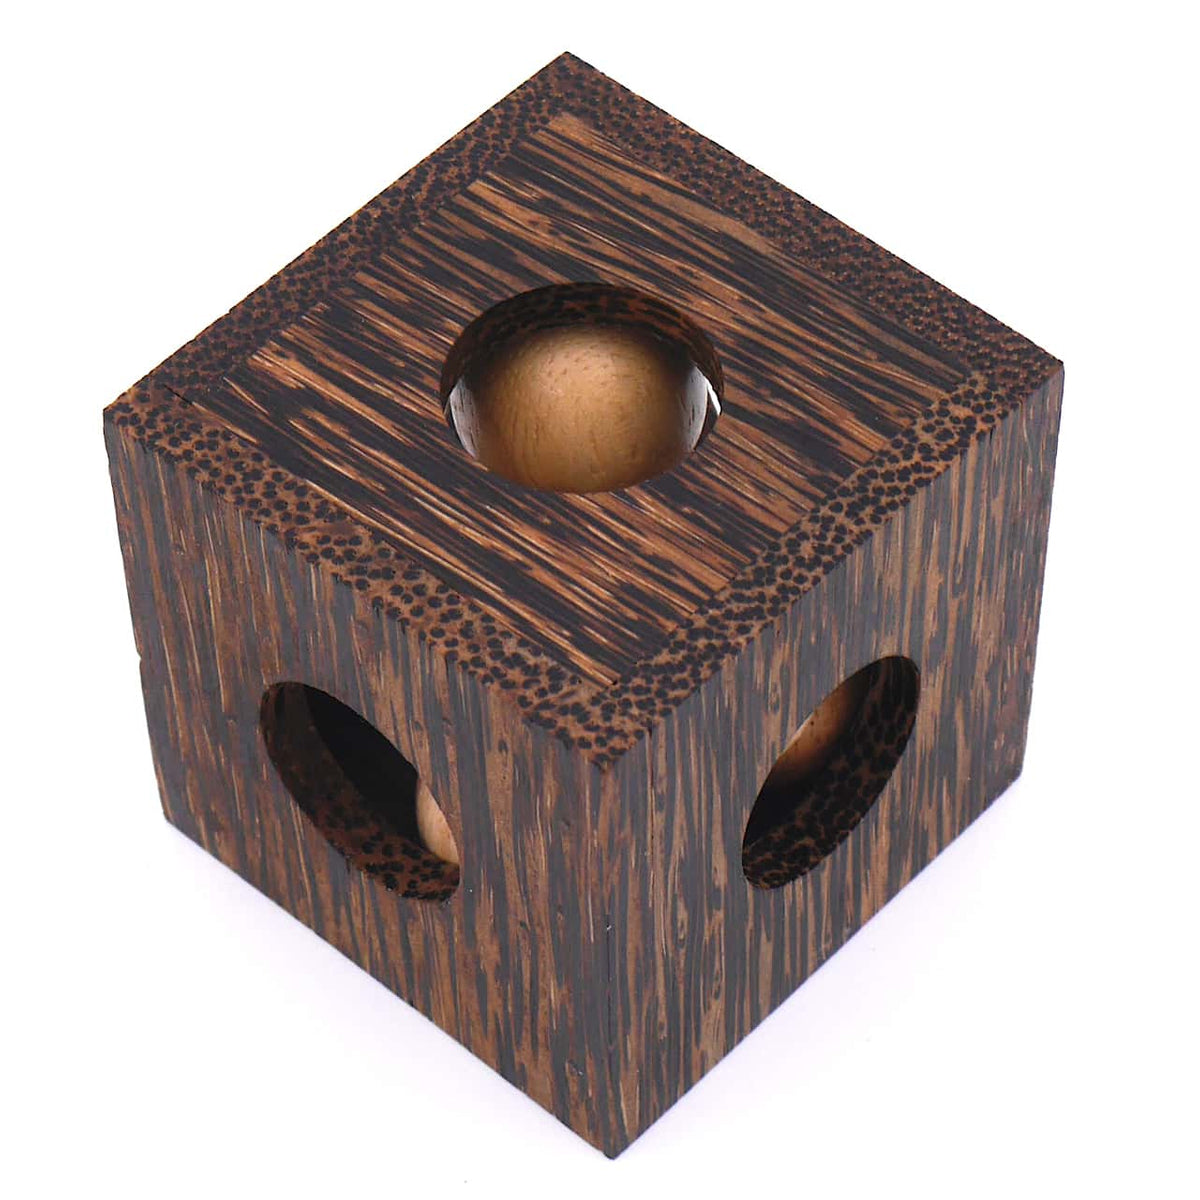 rombol-romboldenkspiele-woodenpuzzle